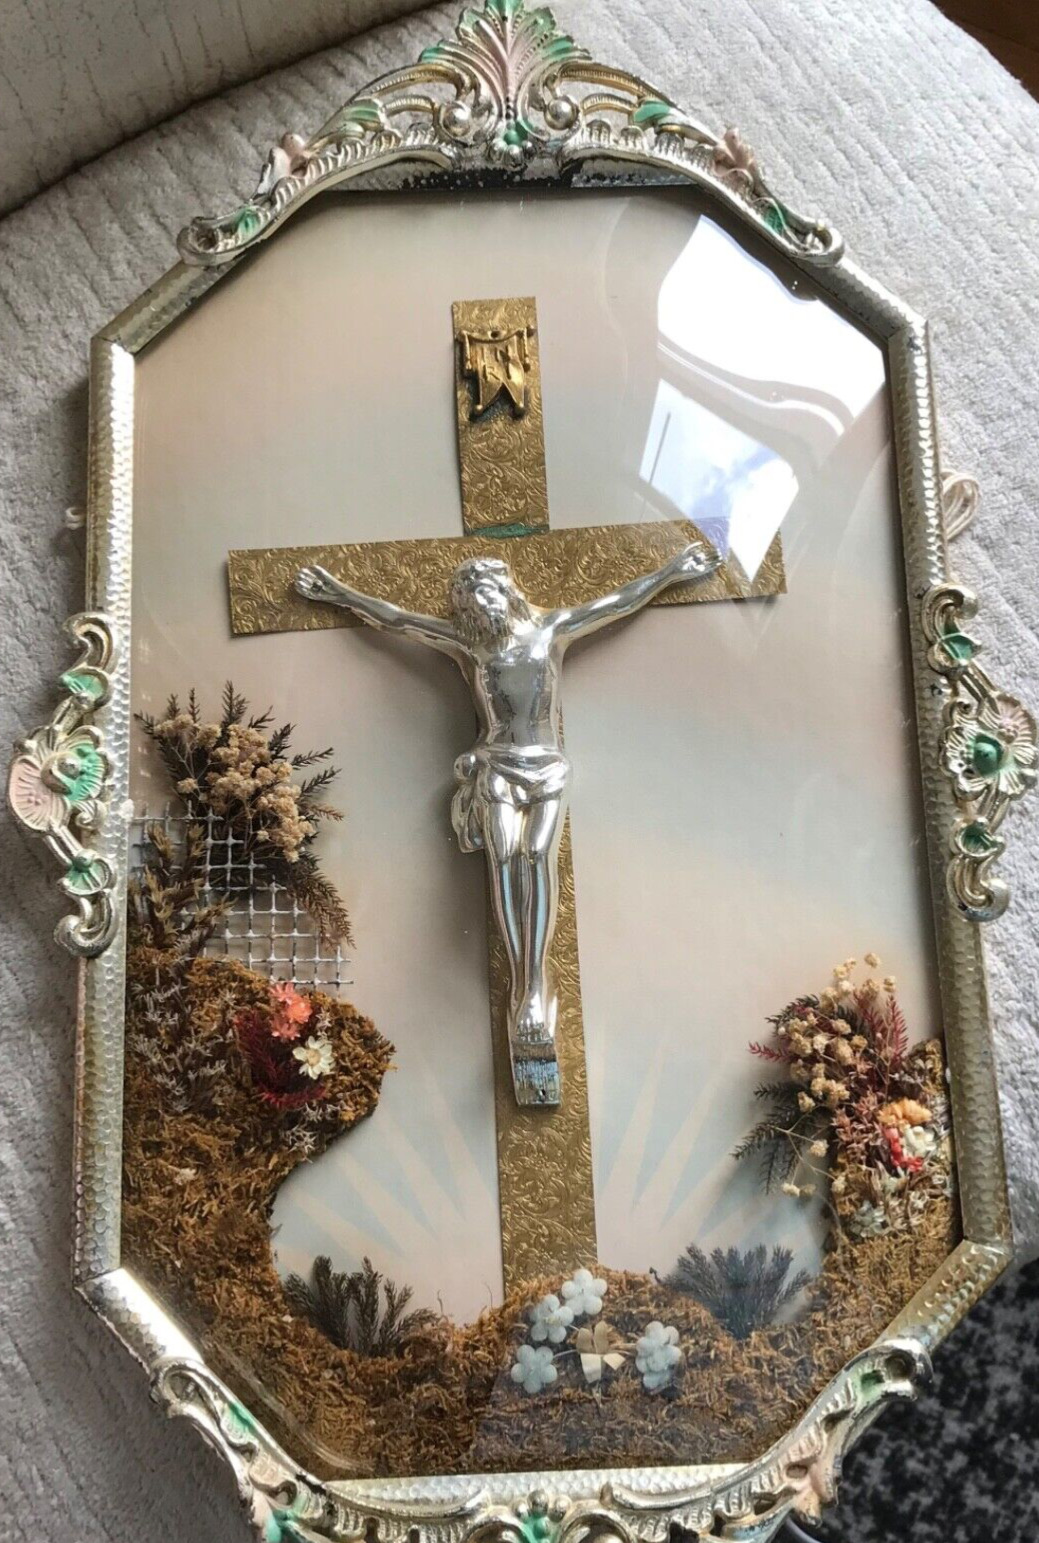 VTG ANTQ BRASS CONVEX GLASS CHRIST/CRUCIFIX PICTURE ORNATE FRAME dried flowers